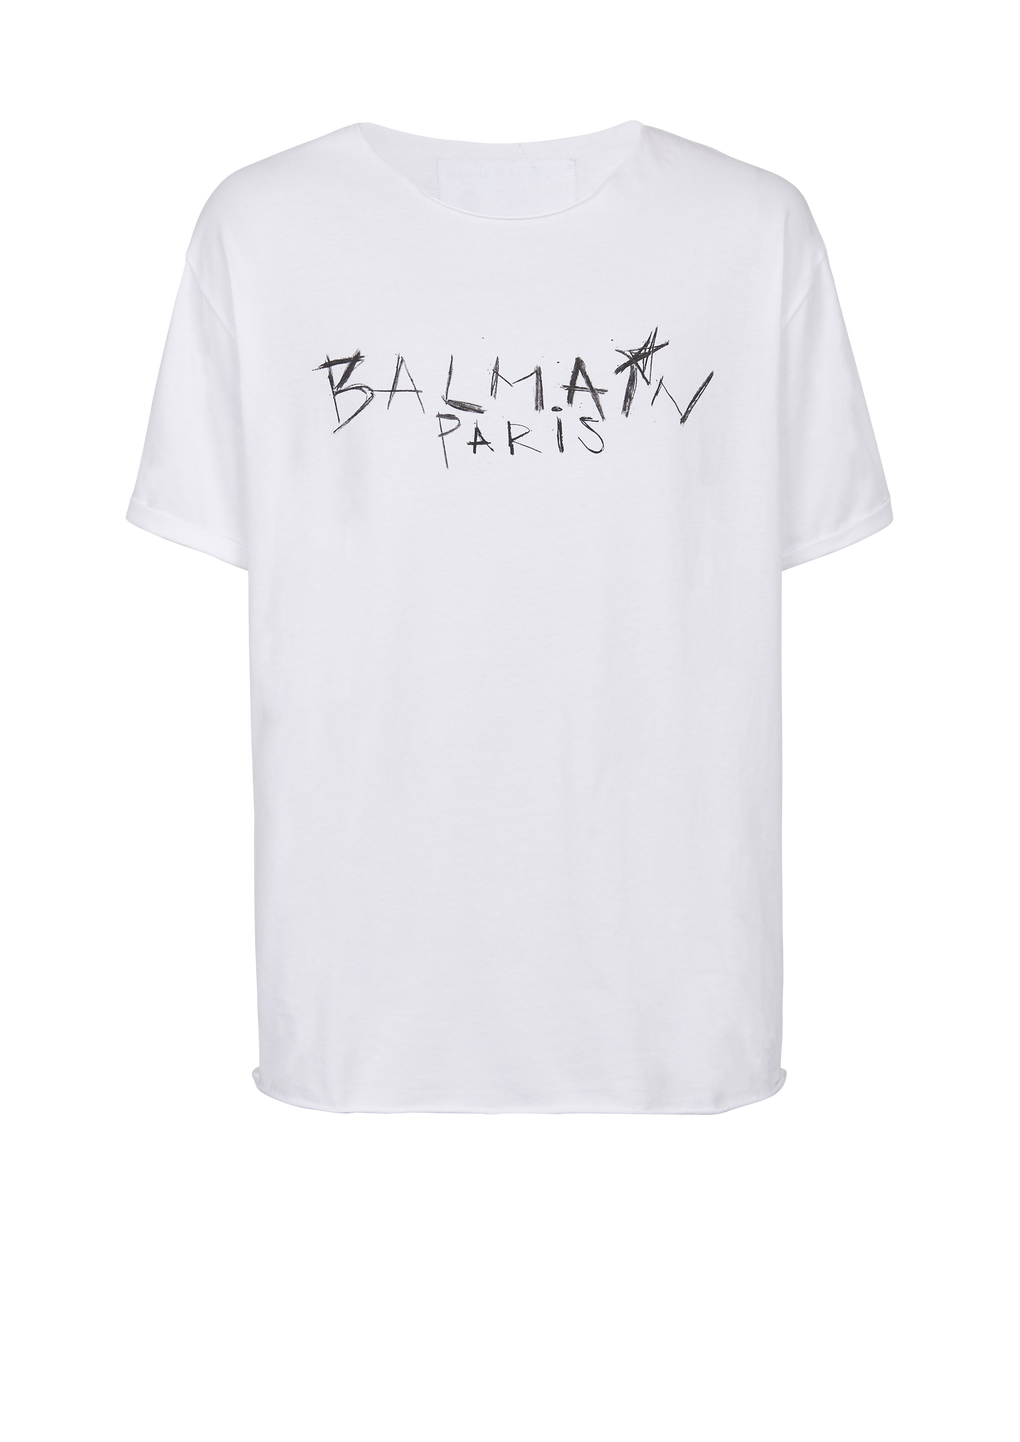 T-shirt en coton imprimé logo graffiti Balmain Paris, blanc, hi-res